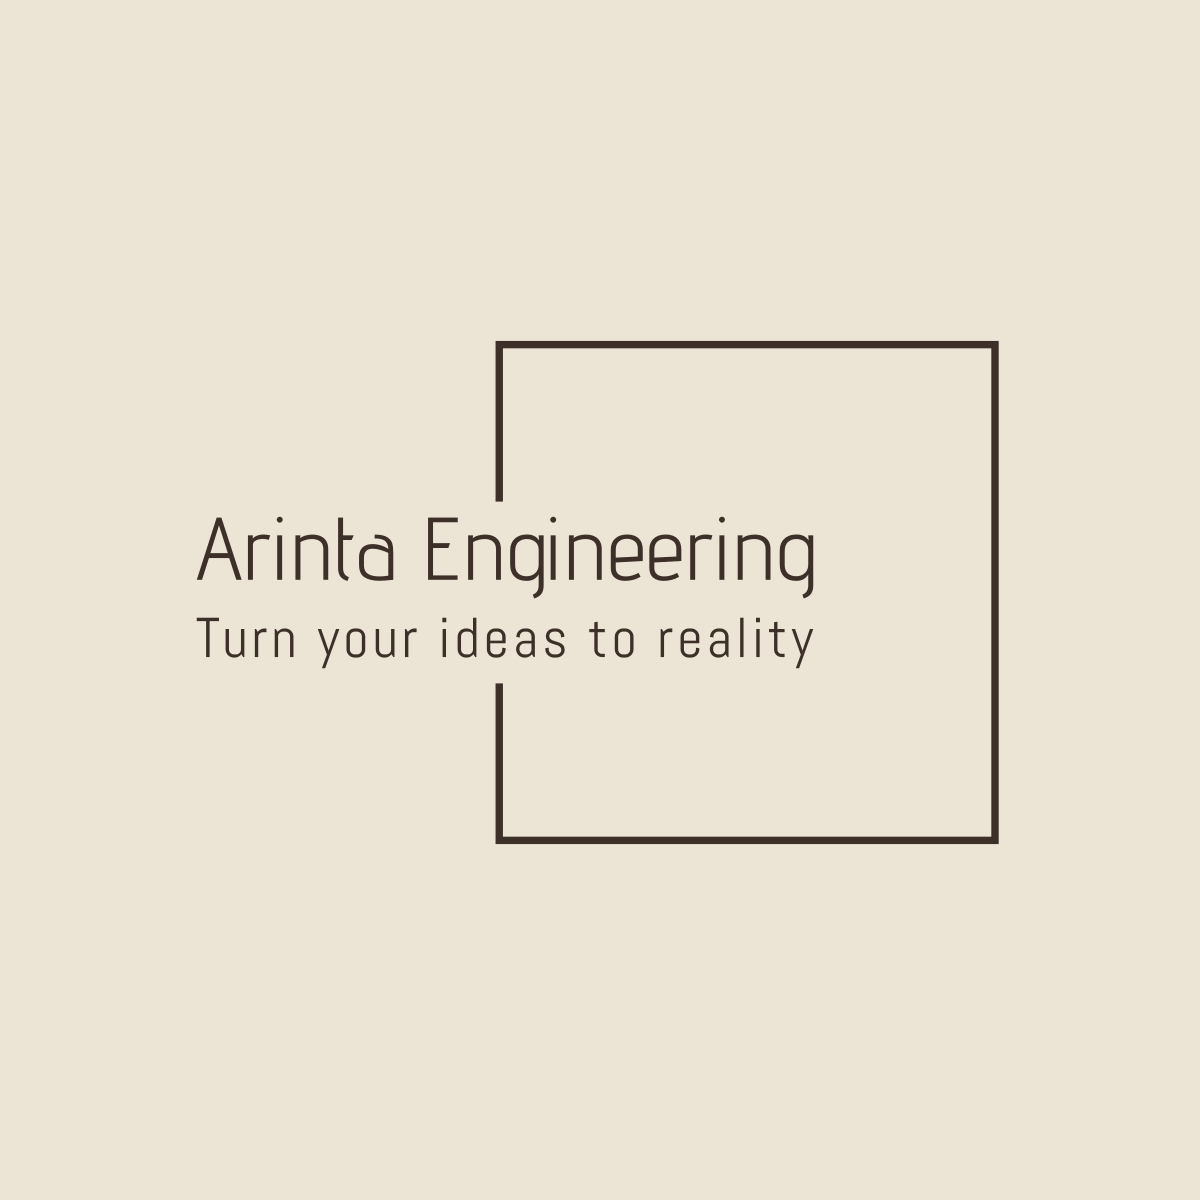 Arinta Engineering